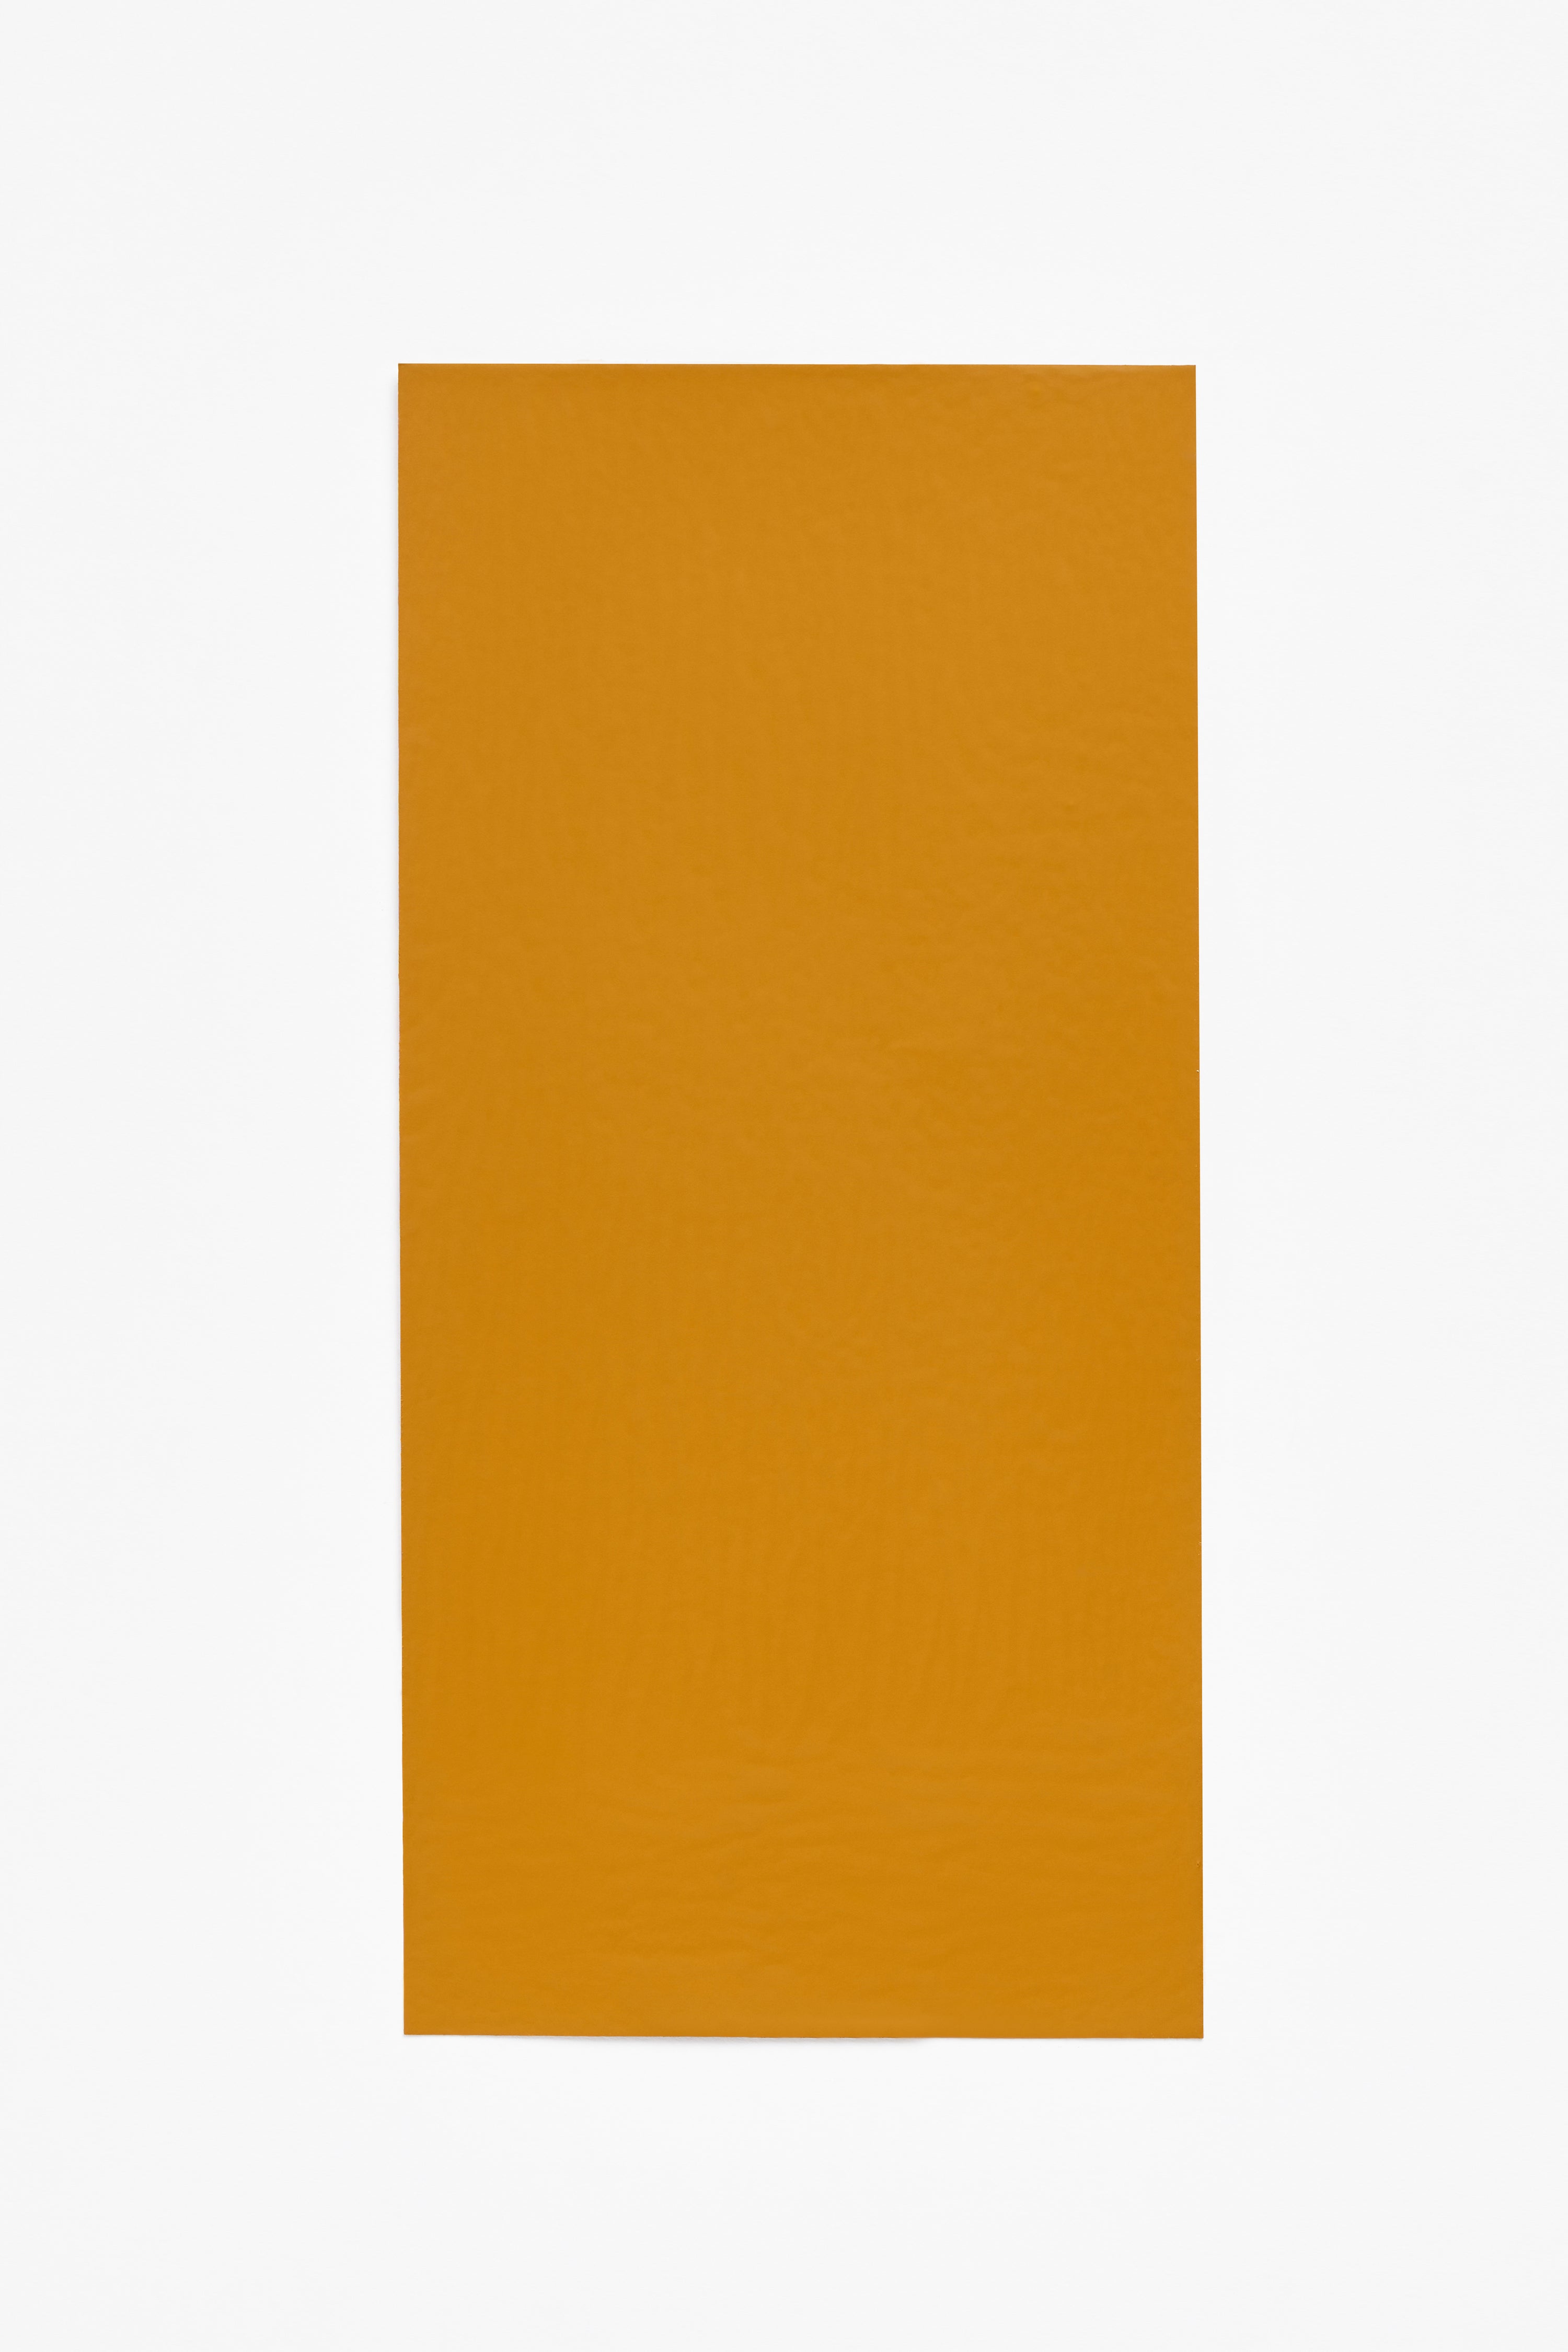 Titian — a paint colour developed by David Thulstrup for Blēo